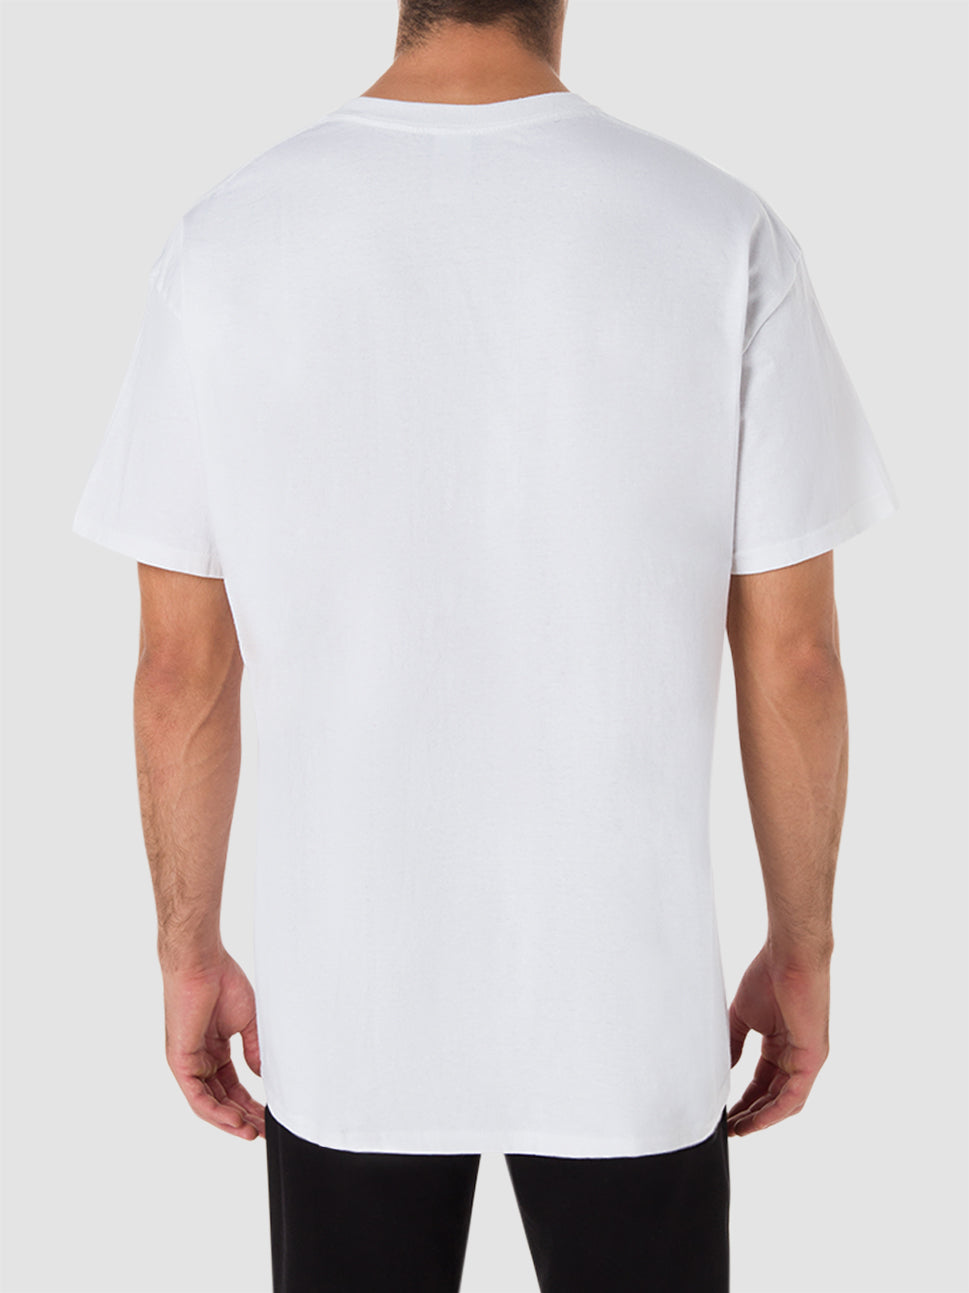 Thrasher Skate Mag T Shirt White 311027